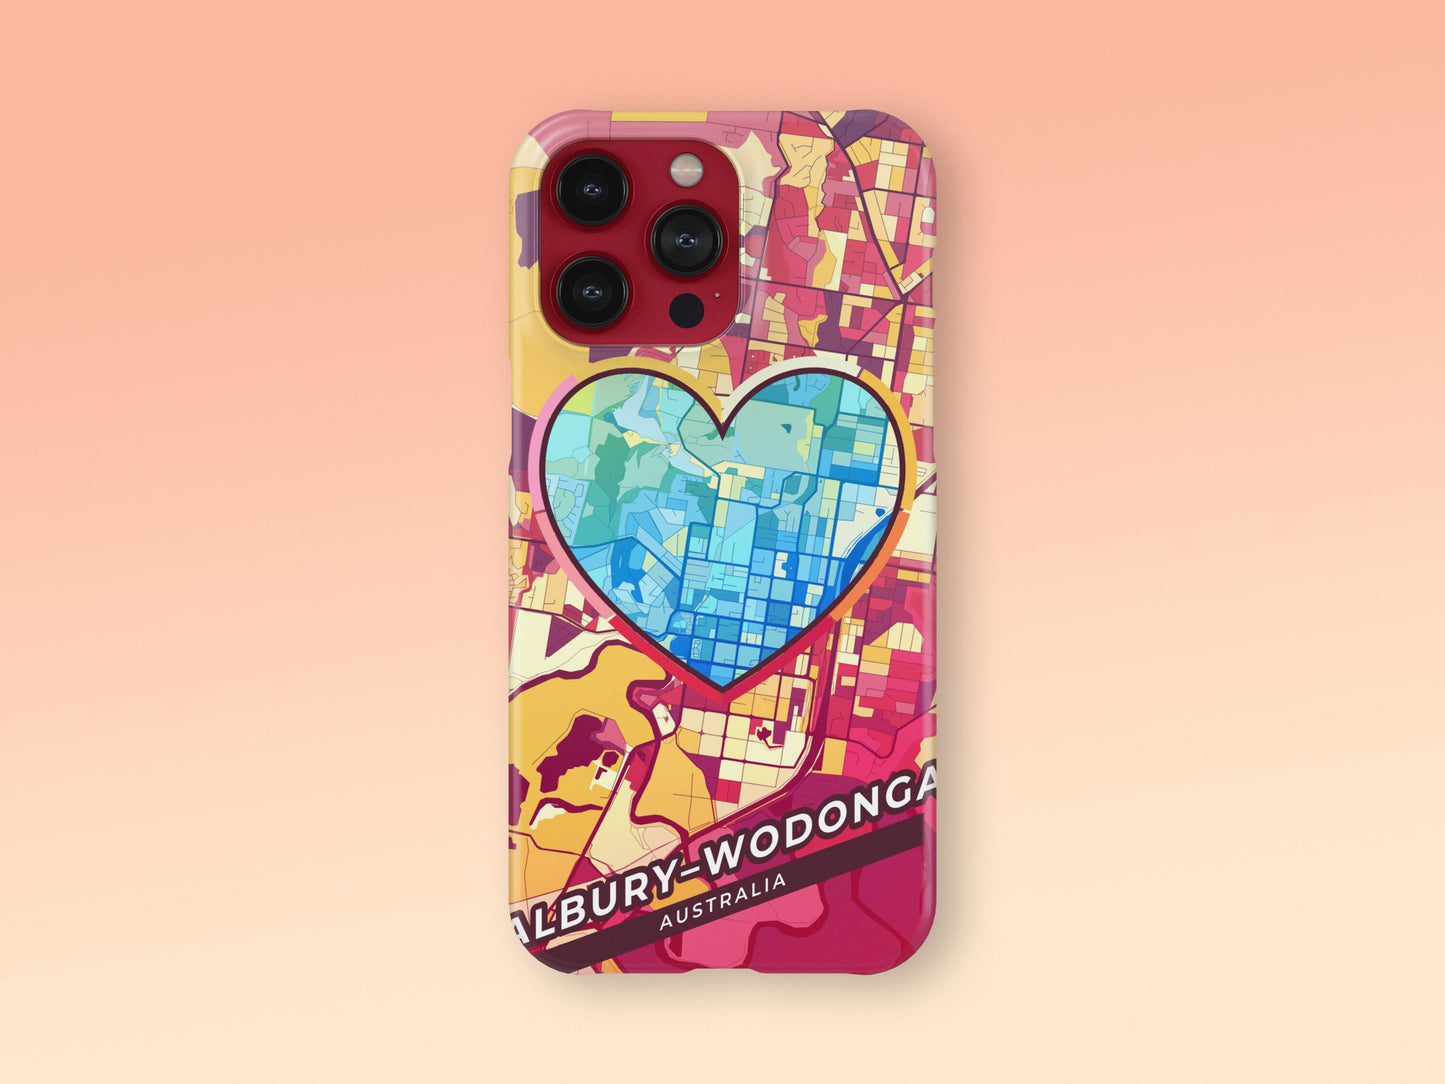 Albury–Wodonga Australia slim phone case with colorful icon. Birthday, wedding or housewarming gift. Couple match cases. 2